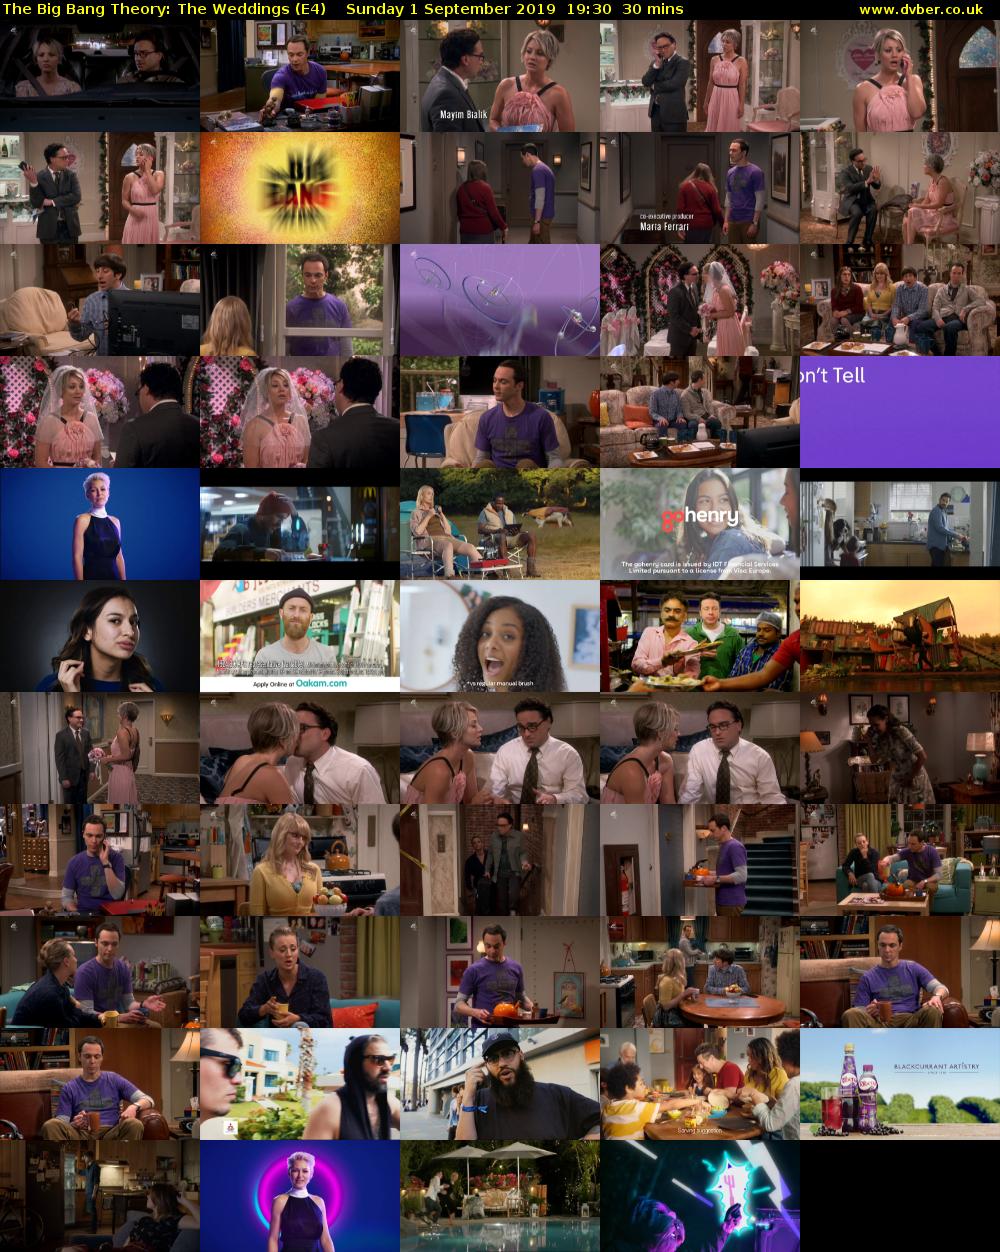 The Big Bang Theory: The Weddings (E4) Sunday 1 September 2019 19:30 - 20:00